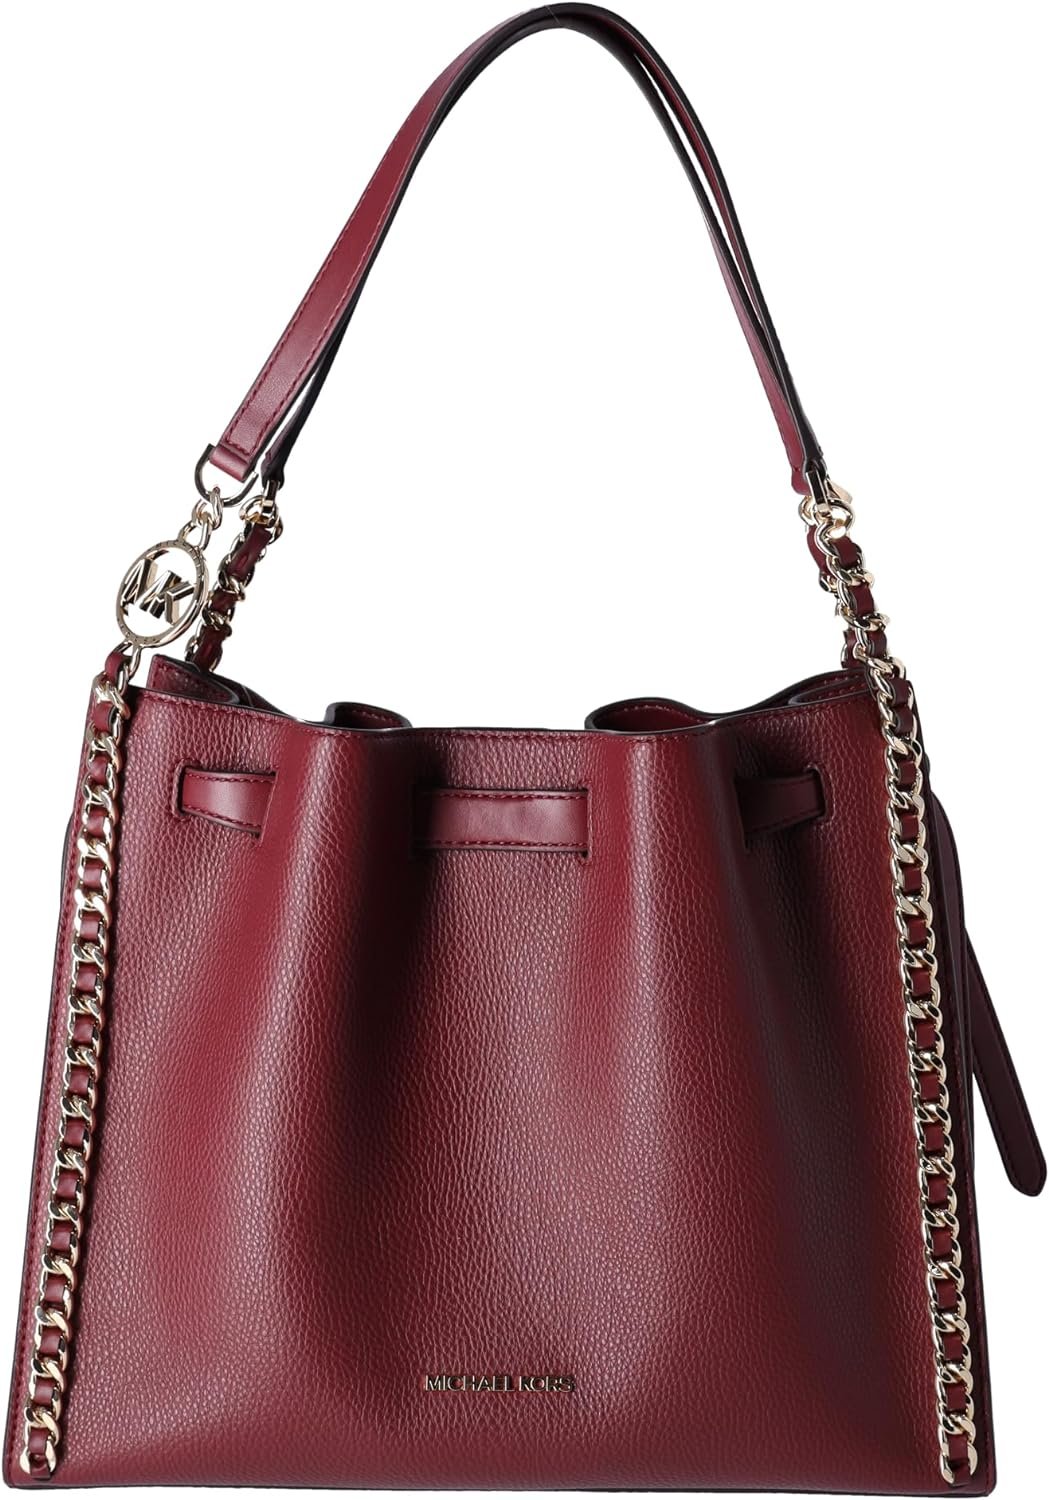 Michael Kors Mina Large Chain Shoulder Bag Hobo Tote Dark Cherry Pebbled Leather